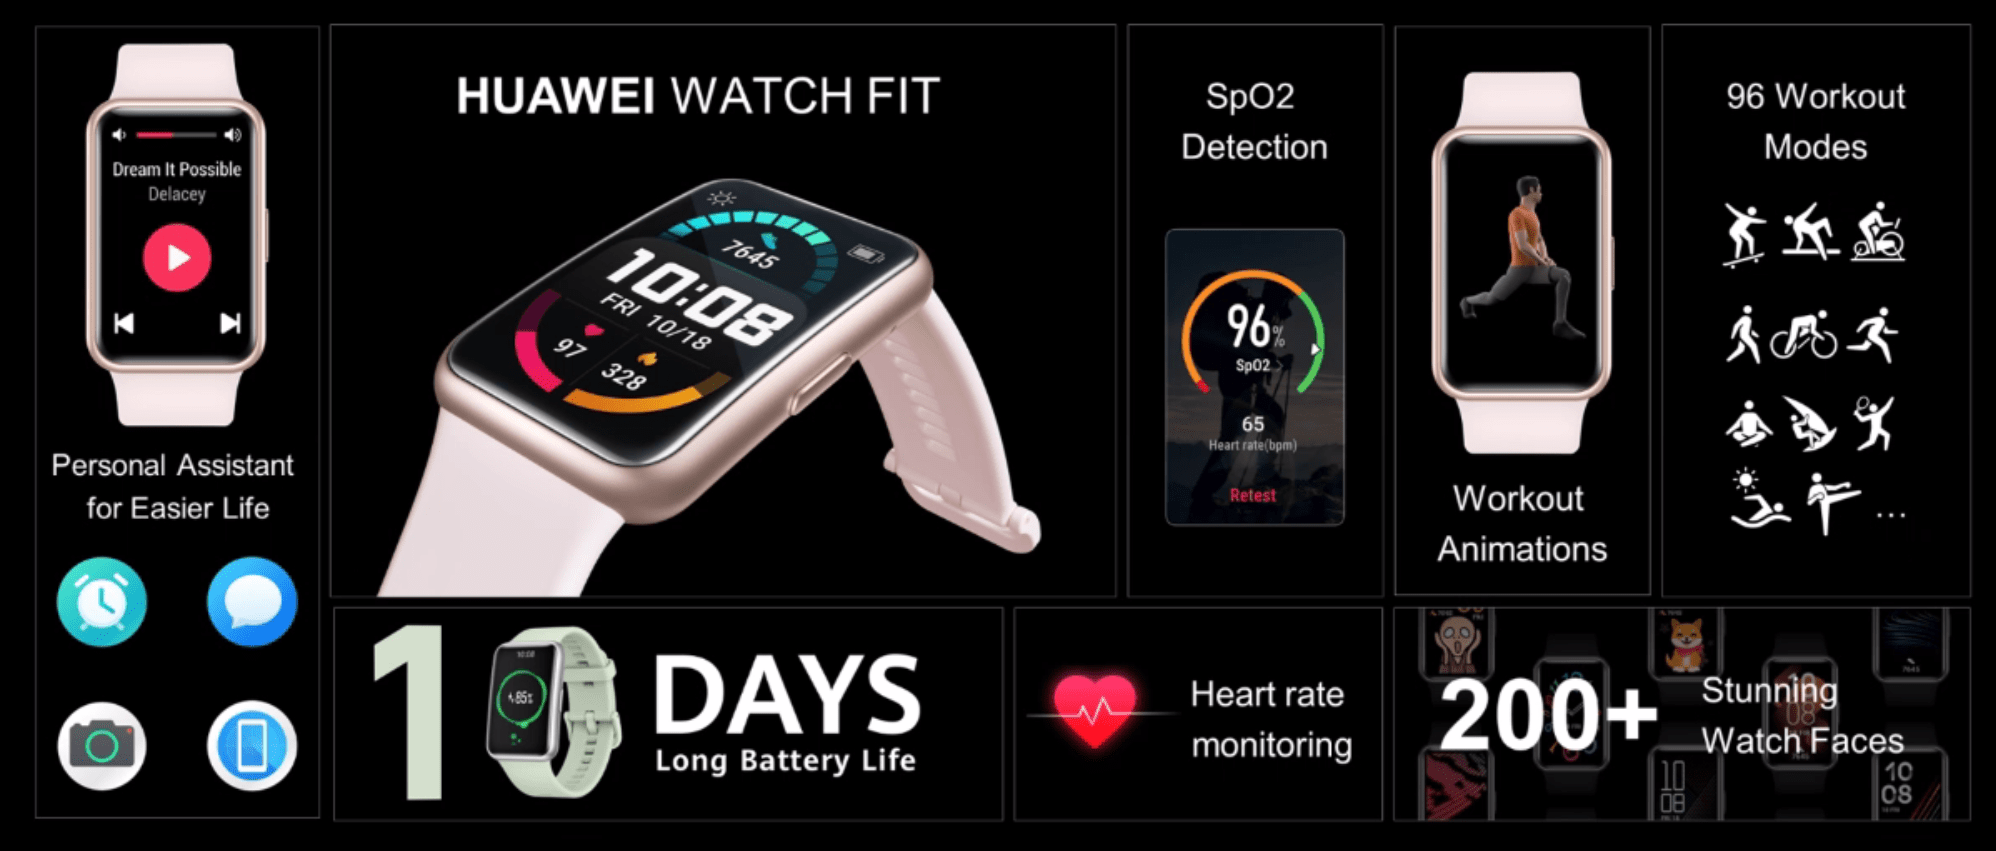 Приложение для часов Huawei. One hope Huawei часы. Сон на часах Huawei Fit. Wearfit Pro часы. Регистрация часов huawei